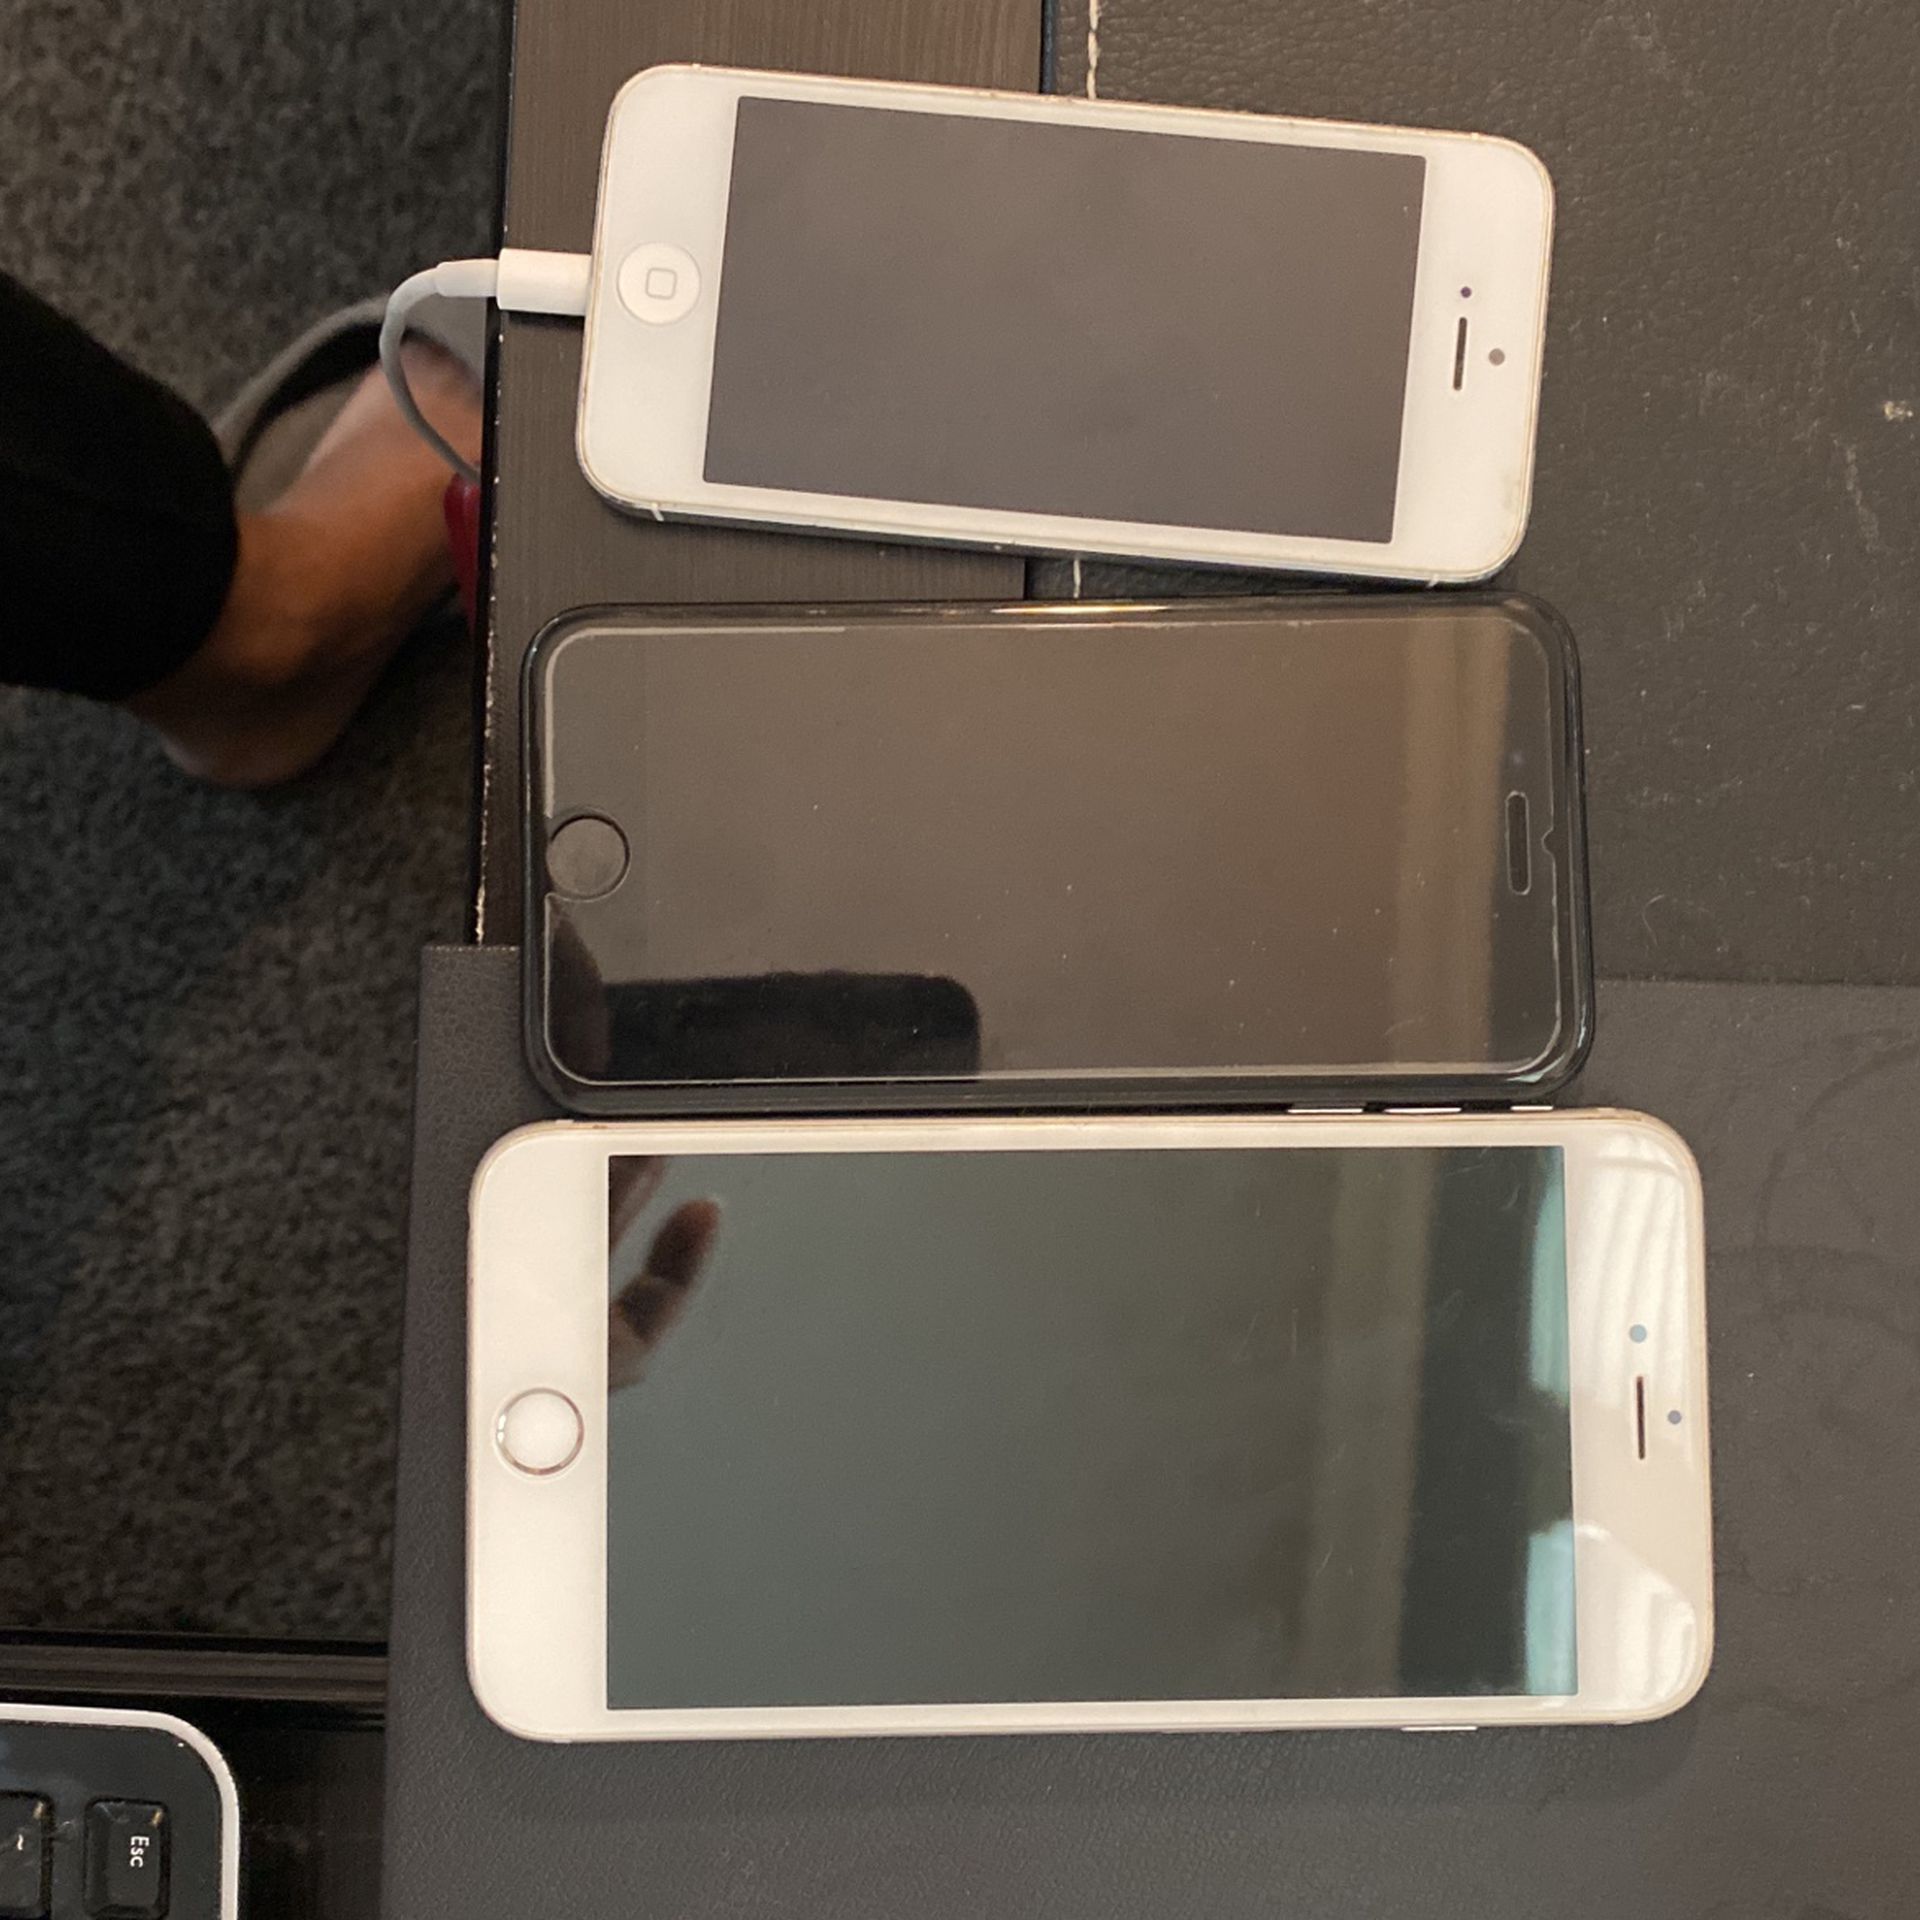 3 iPhones 4sale - iPhone 5, iPhone 6 Plus and iPhone 7 